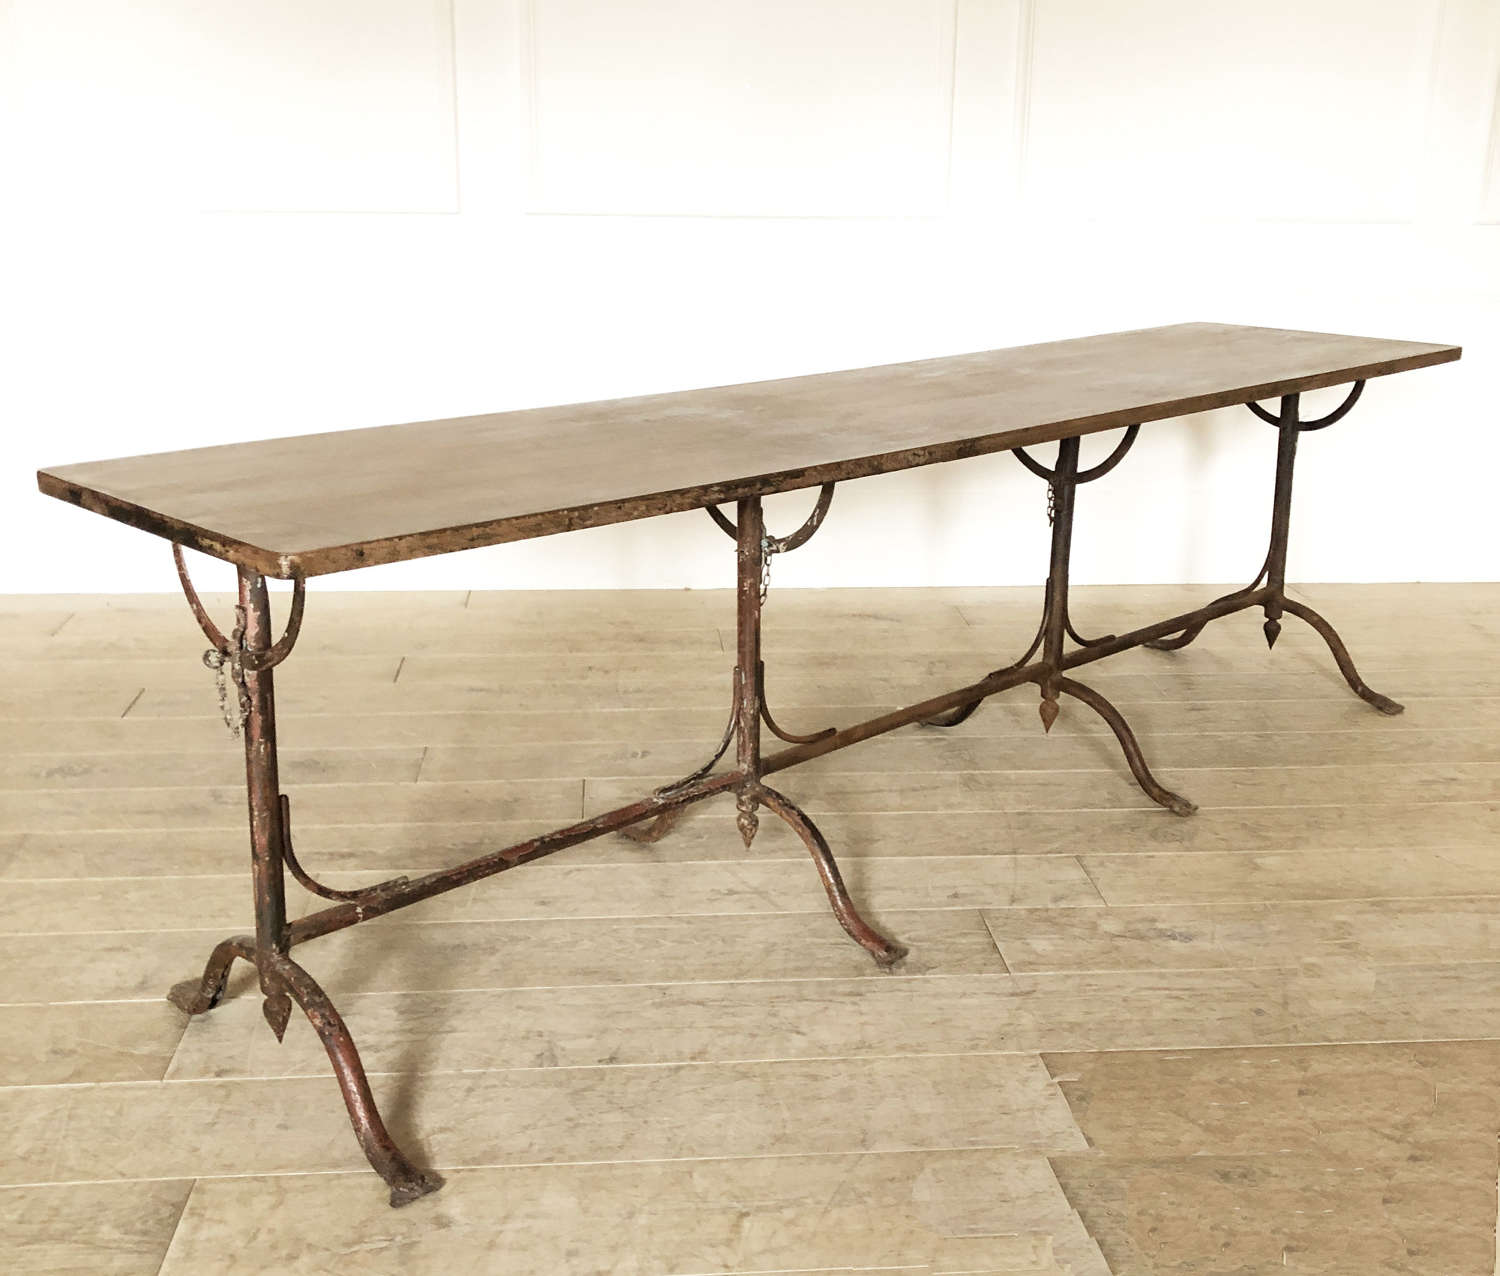 Long Italian 19th c Iron Table with Flip-Top - circa 1880